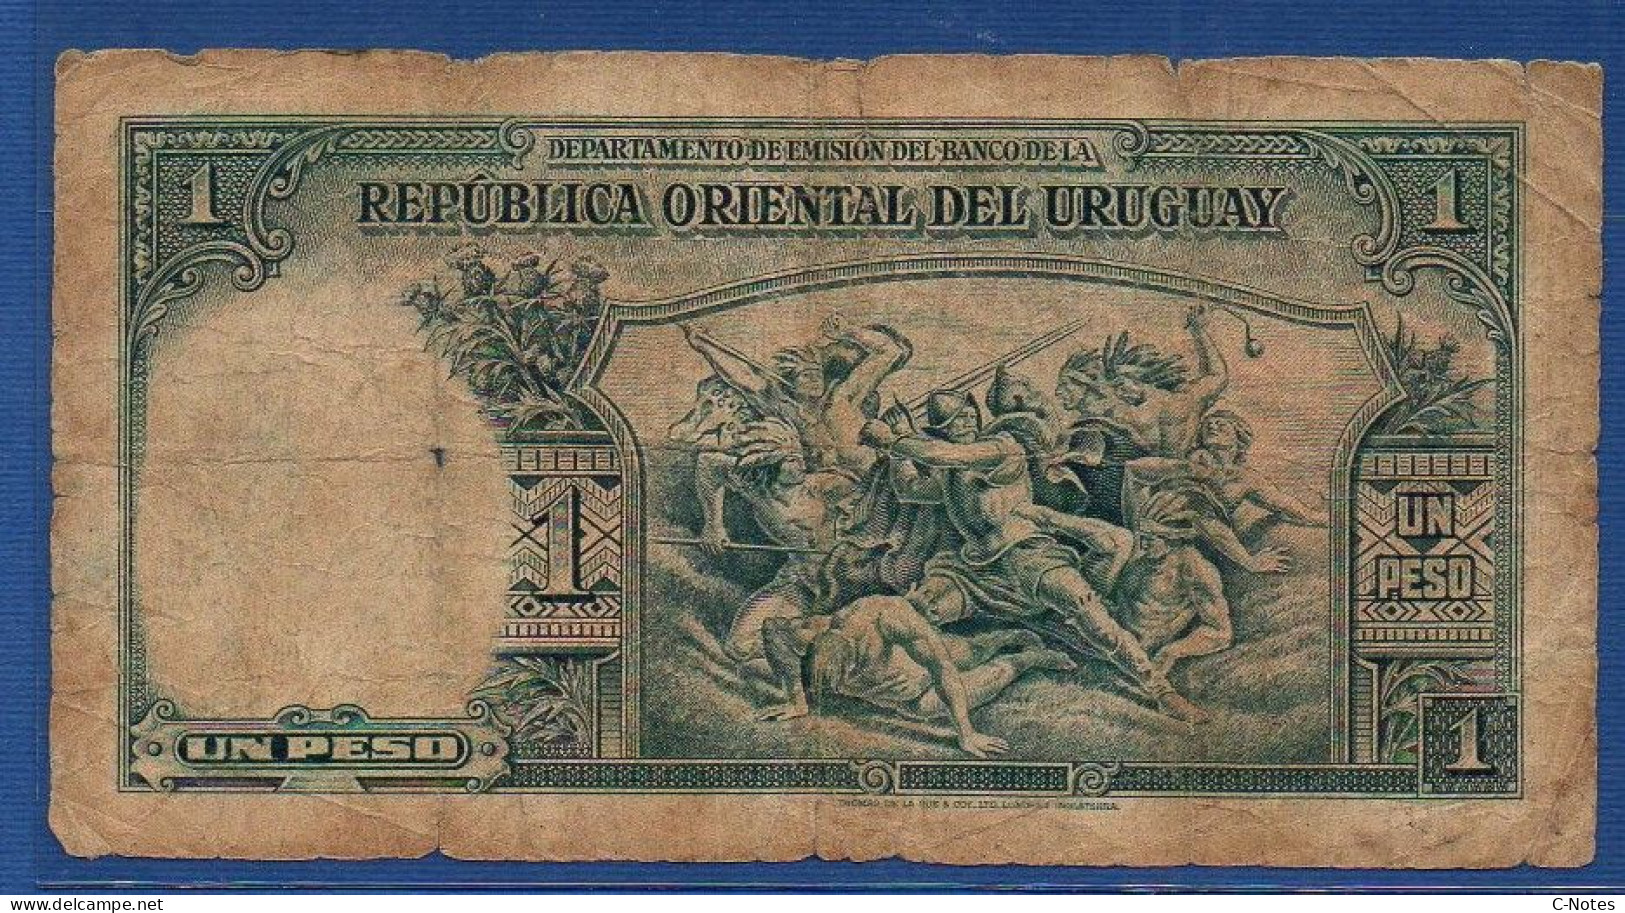 URUGUAY - P. 28d – 1 Peso 1935 Circulated G/VG S/n 15426714 - Uruguay